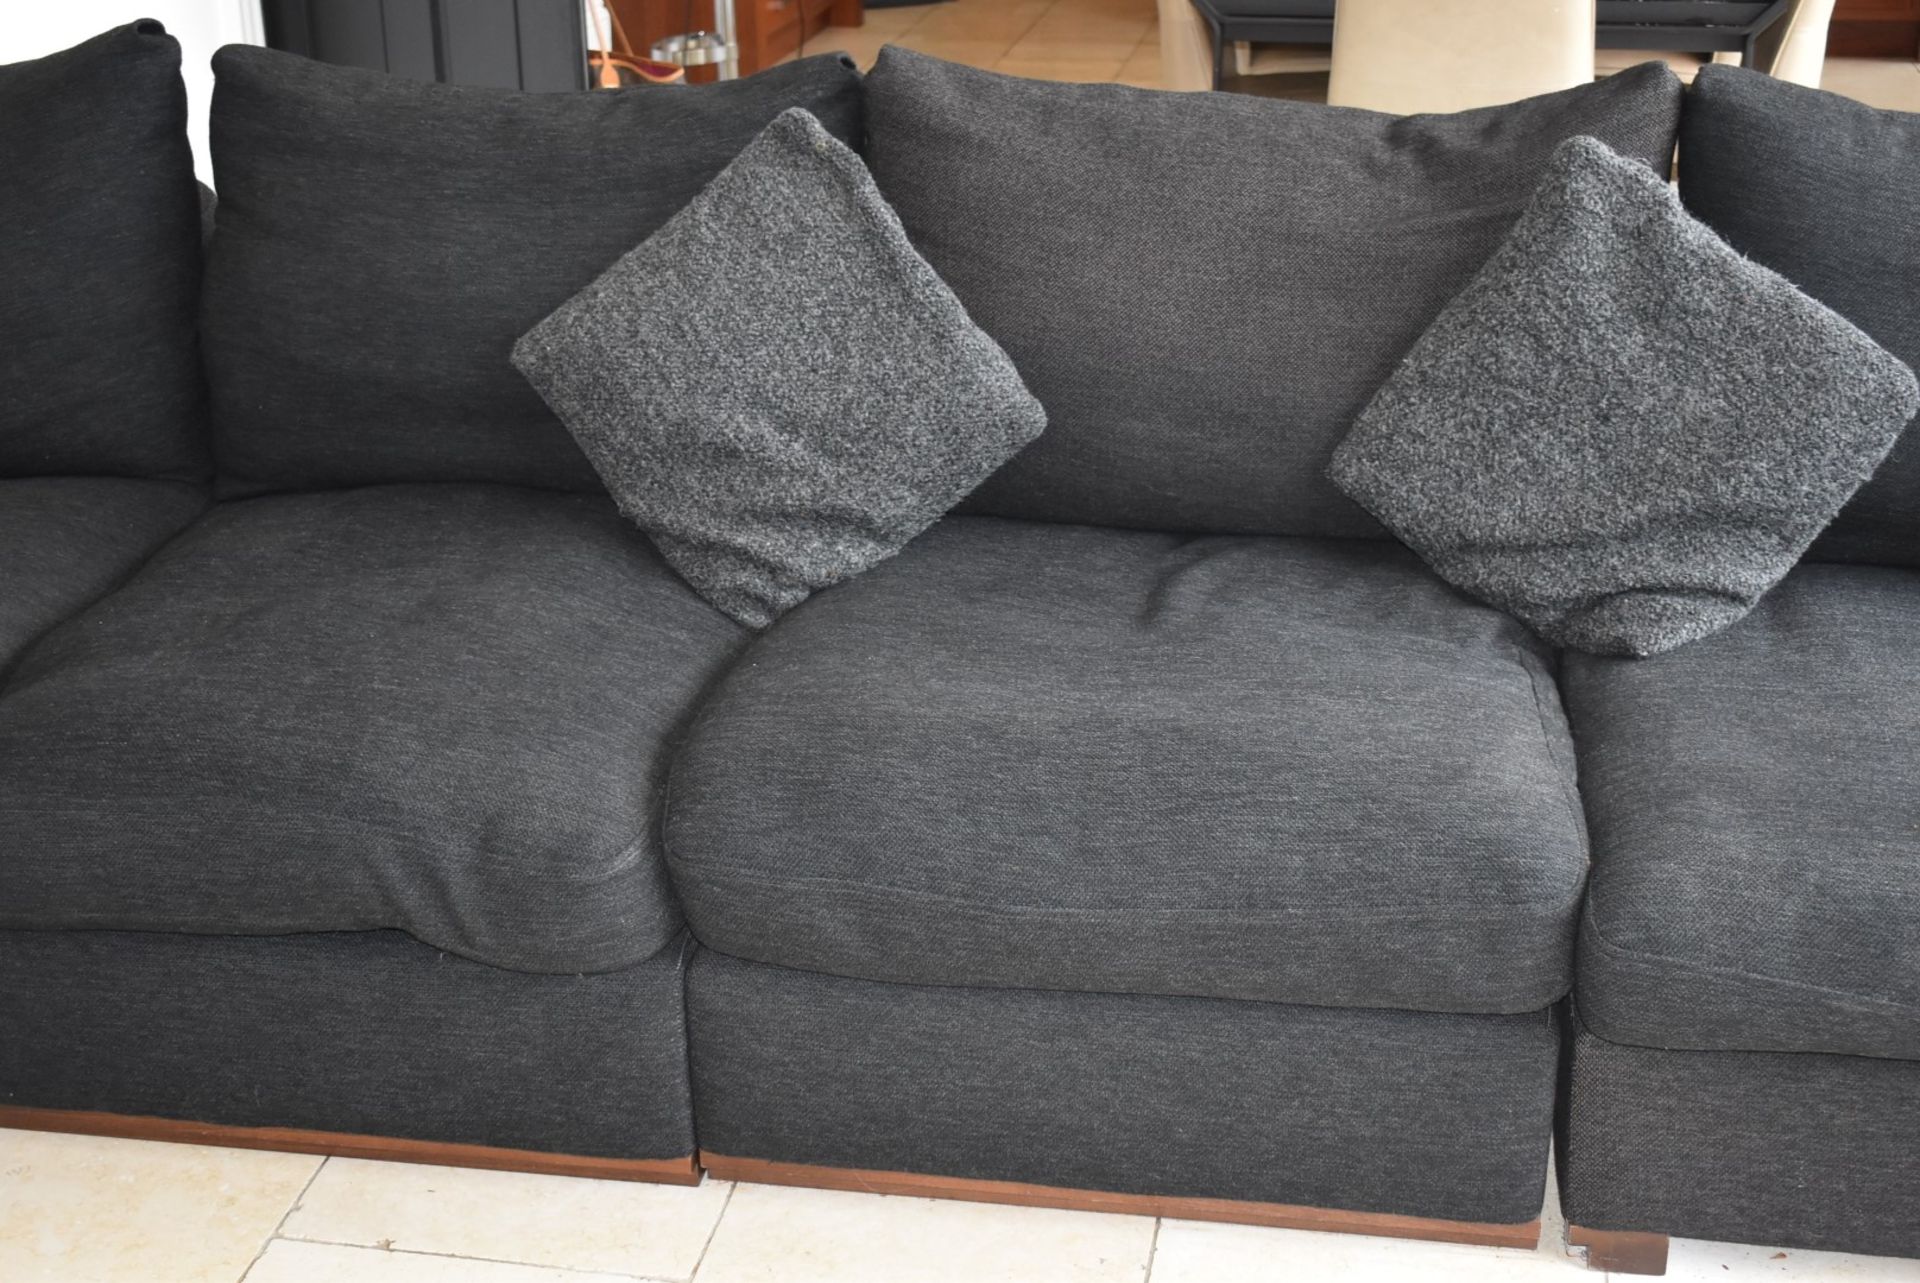 1 x Large Corner Sofa Upholstered in Dark Grey Grey Fabric - Inc Footstool - NO VAT ON THE HAMMER! - Image 5 of 15